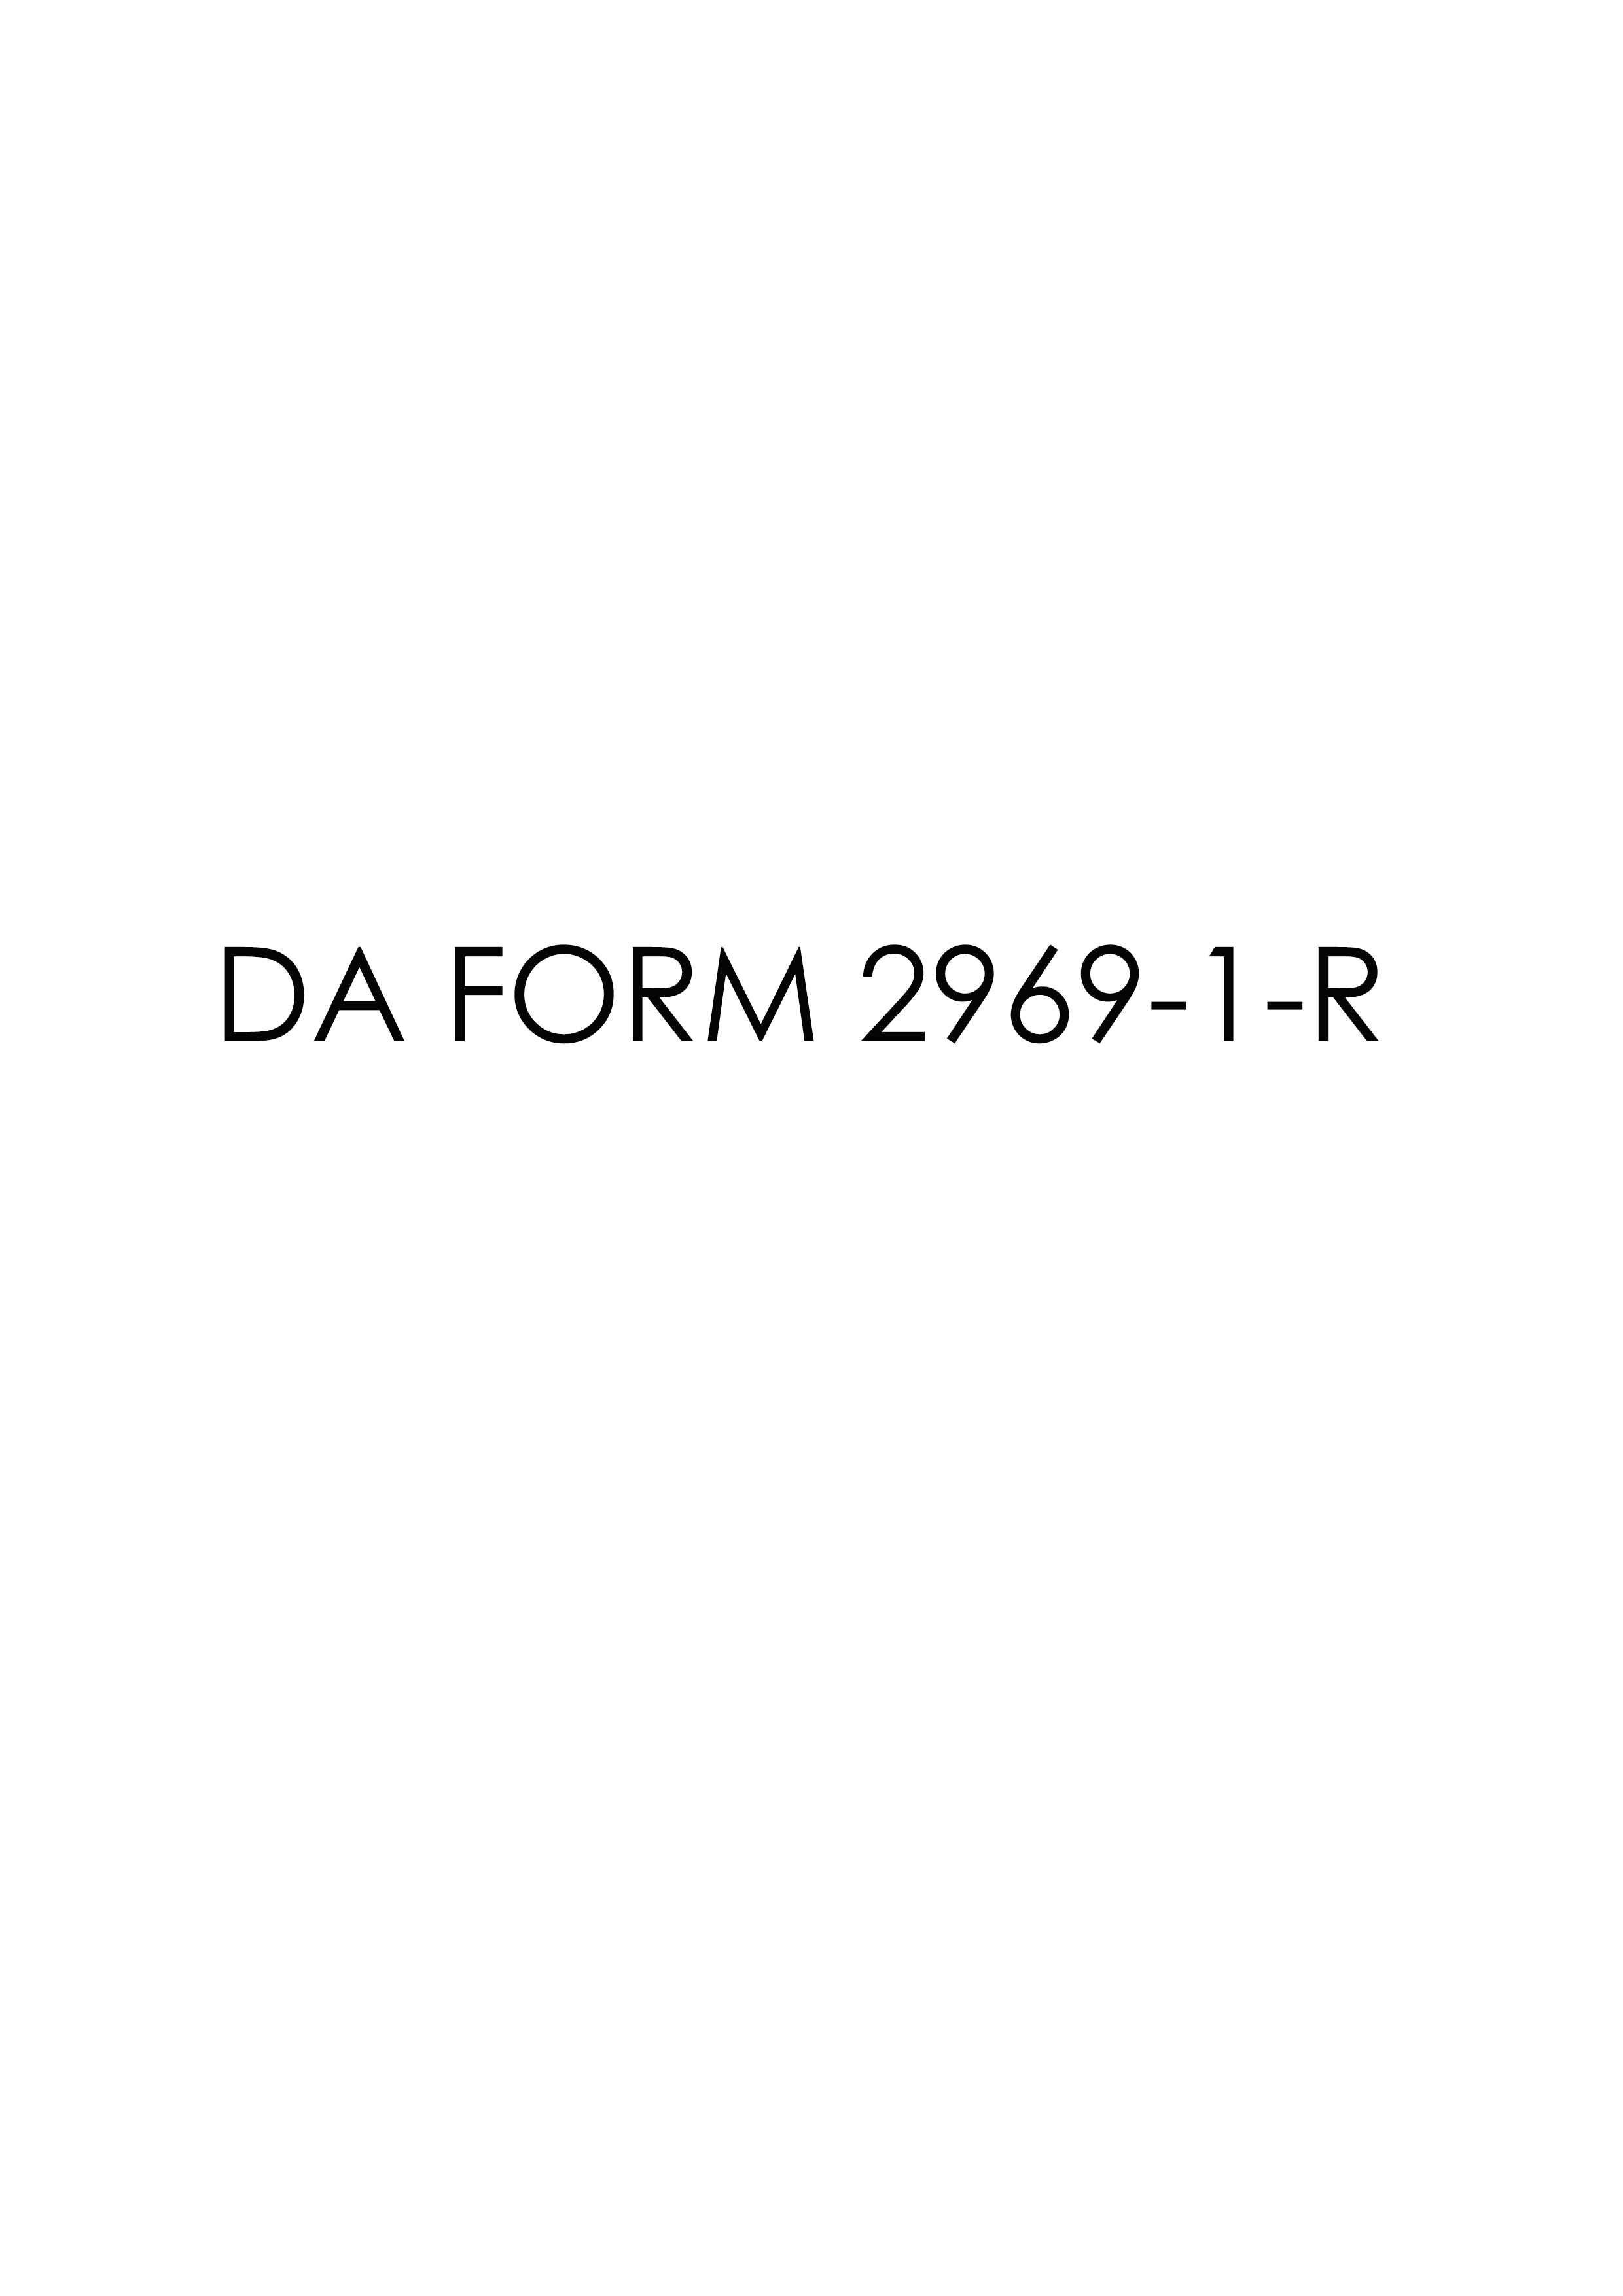 Download Fillable da Form 2969-1-R